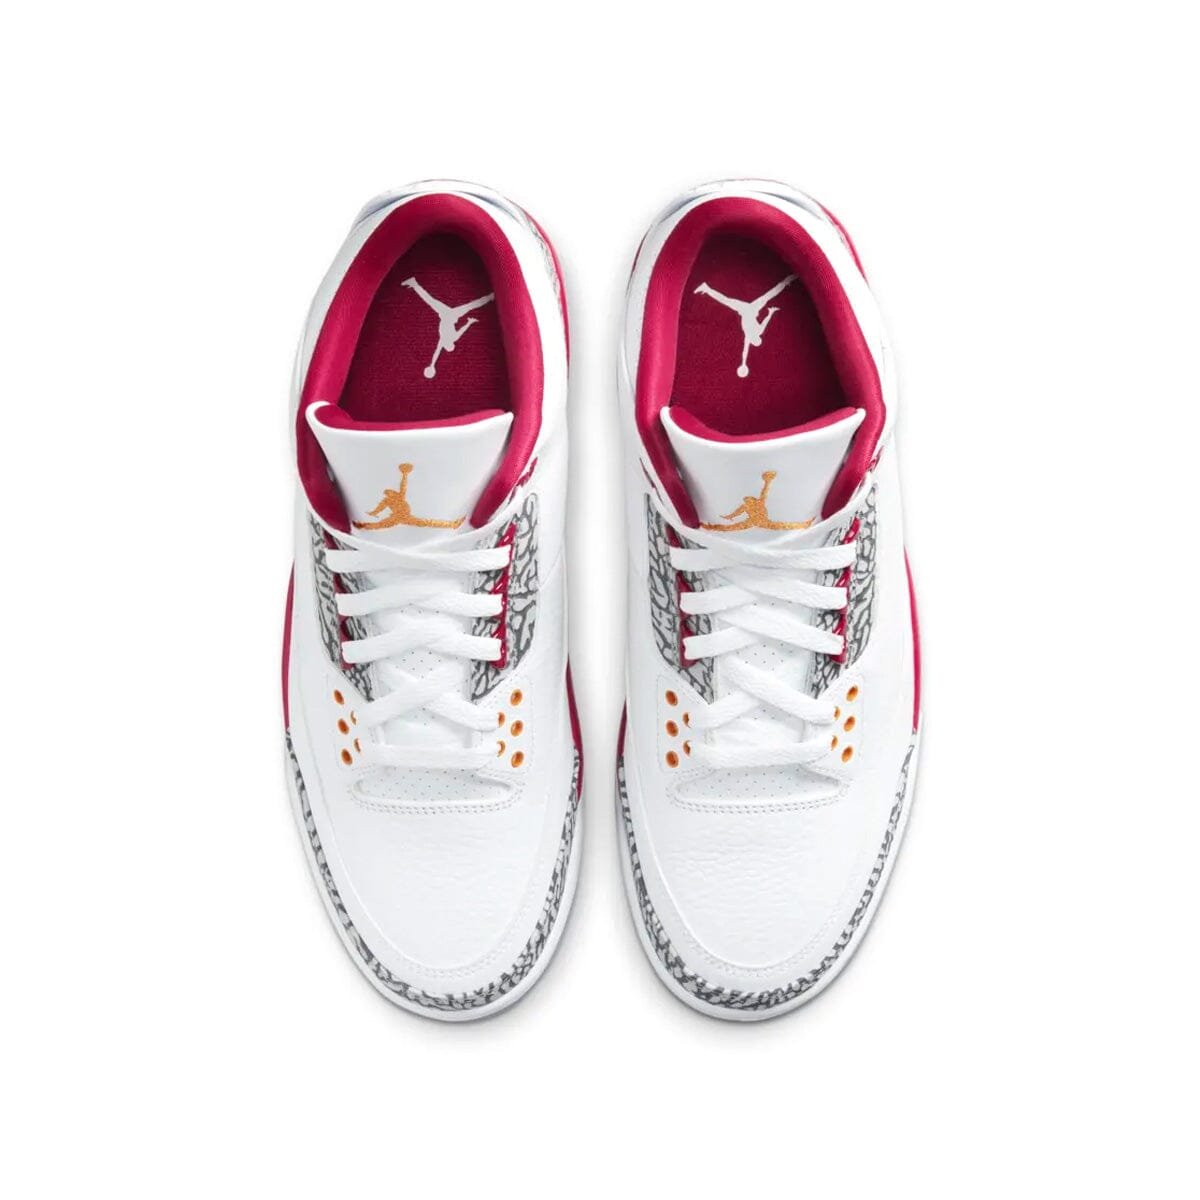 Air Jordan 3 Retro Cardinal Red Air Jordan 3 Blizz Sneakers 